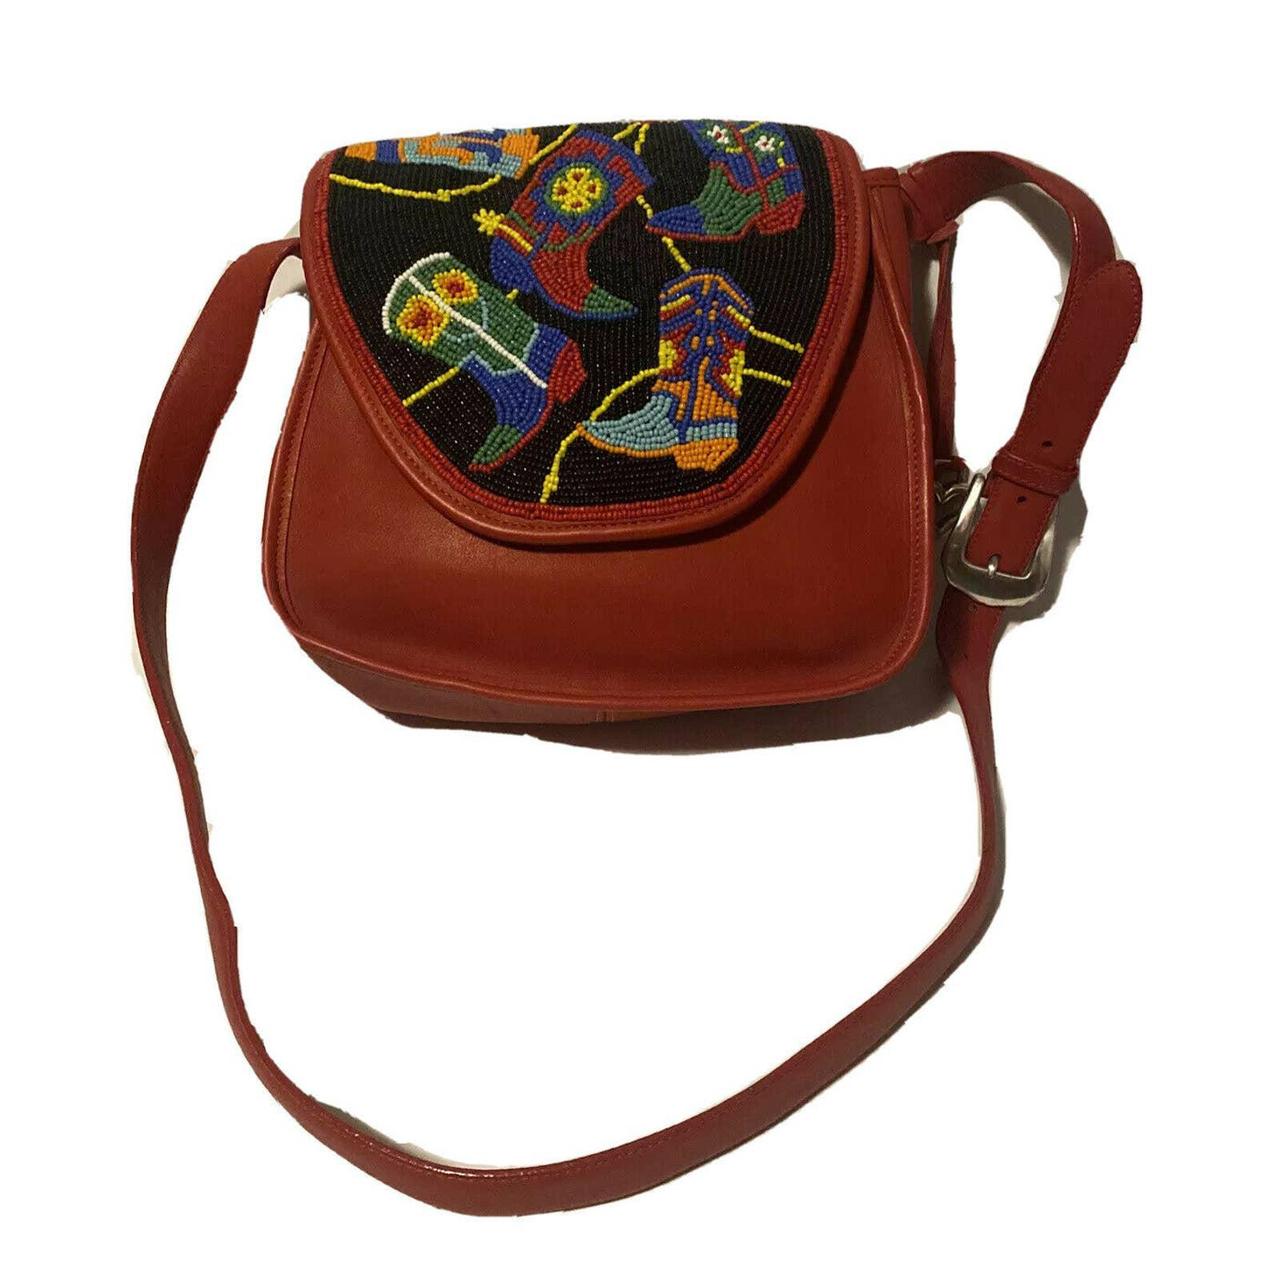 BRIGHTON RED BURGARY handbags purse | Purses, Red handbag, Handbags